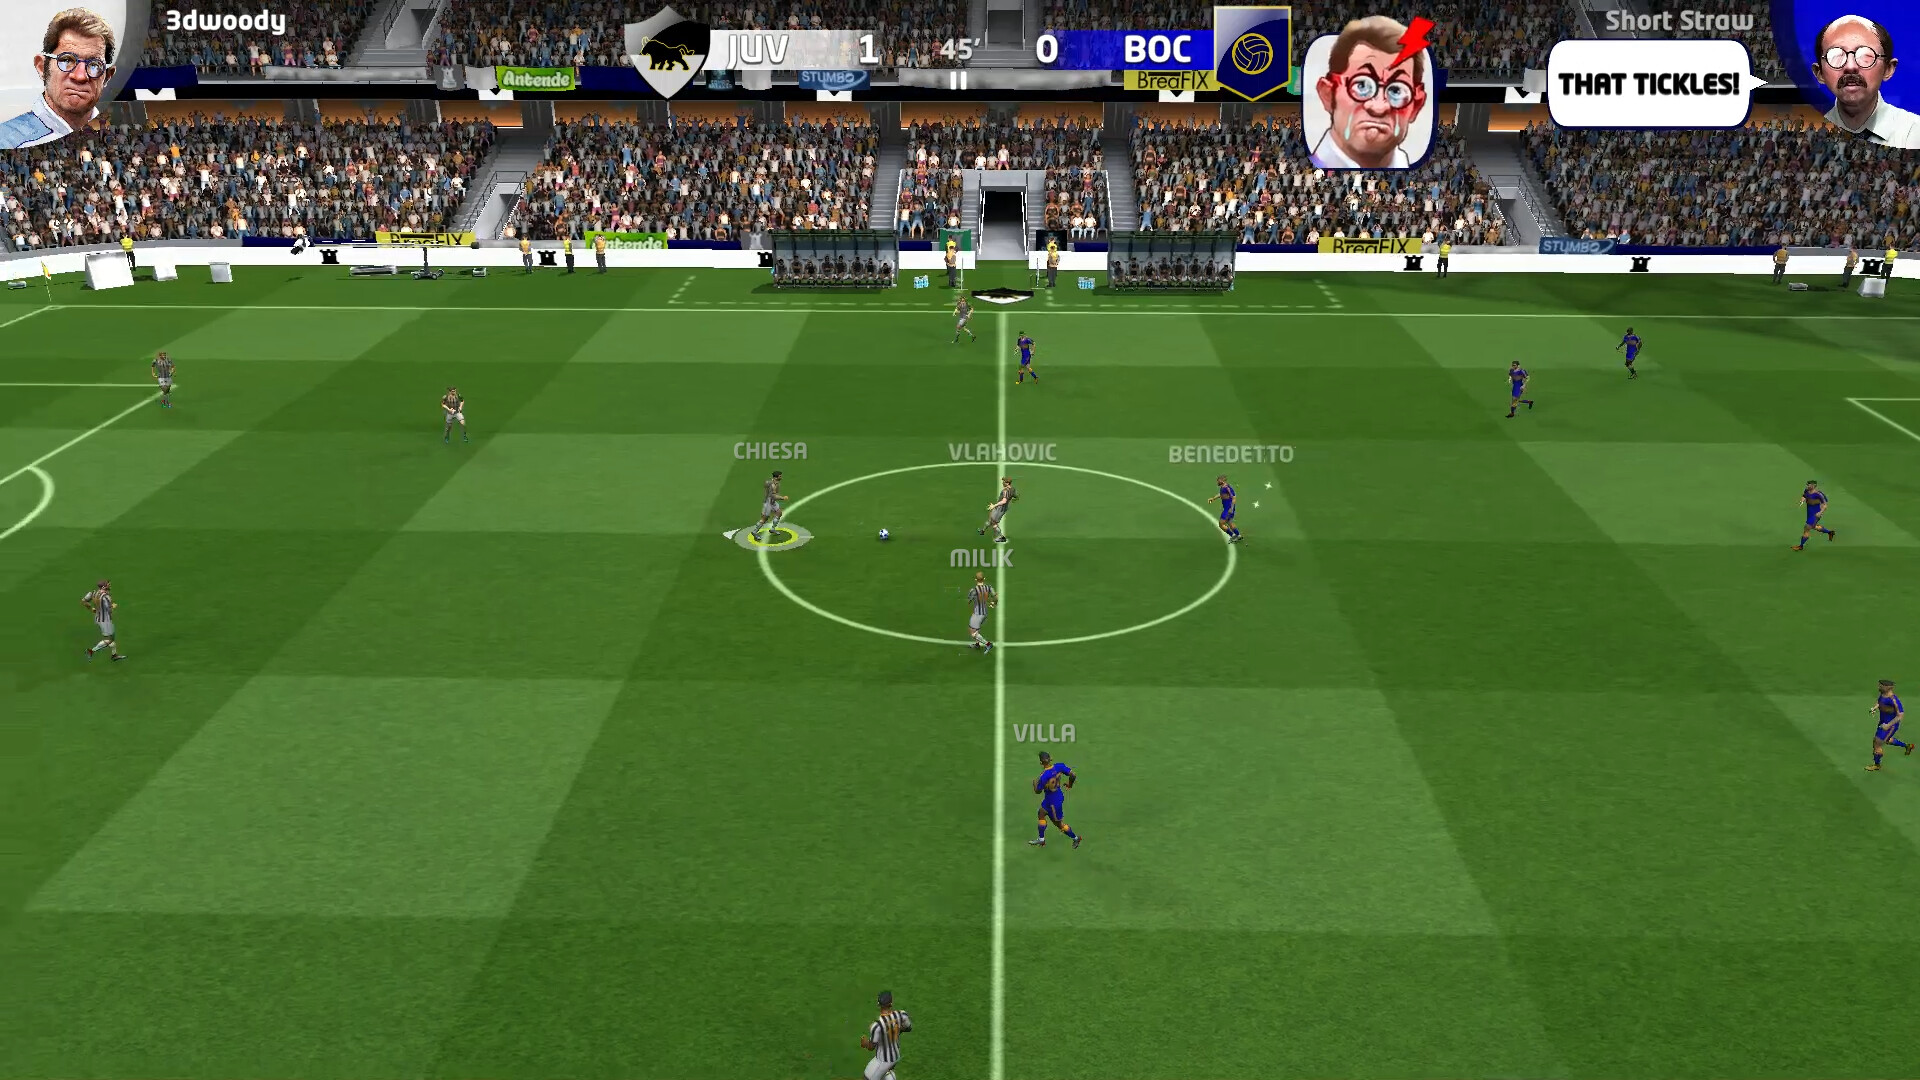 #EA mache „Kinder zu Zockern“ – Jon Hare will mit Sociable Soccer 24 dagegenhalten